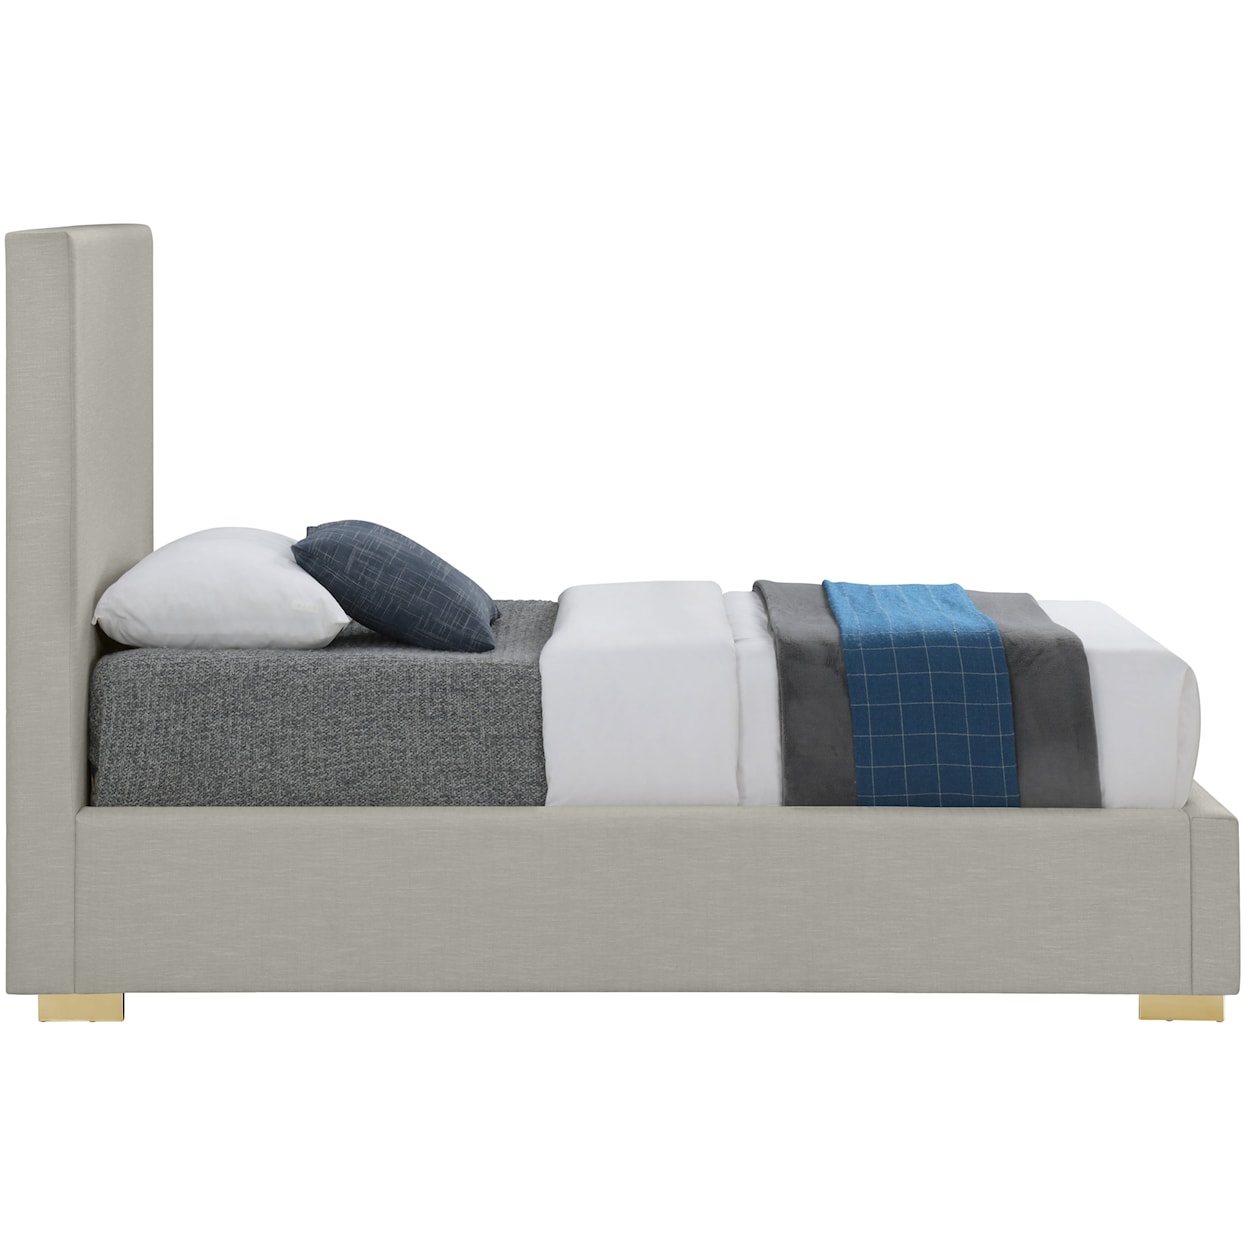 Meridian Furniture Crosby Twin Bed